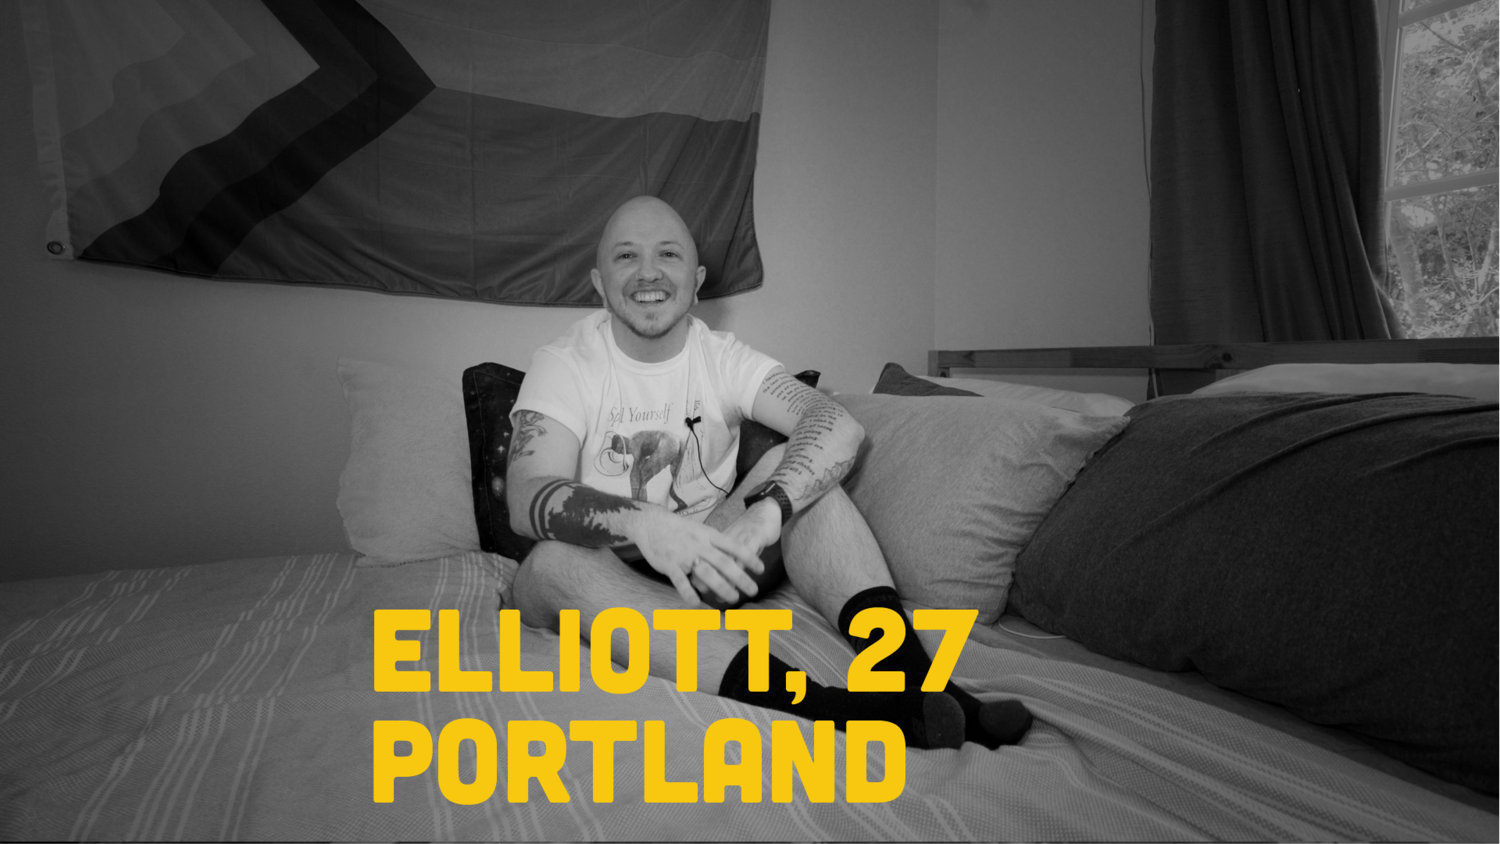 Fruitbowl - S3E11 - Elliott, 27. Portland